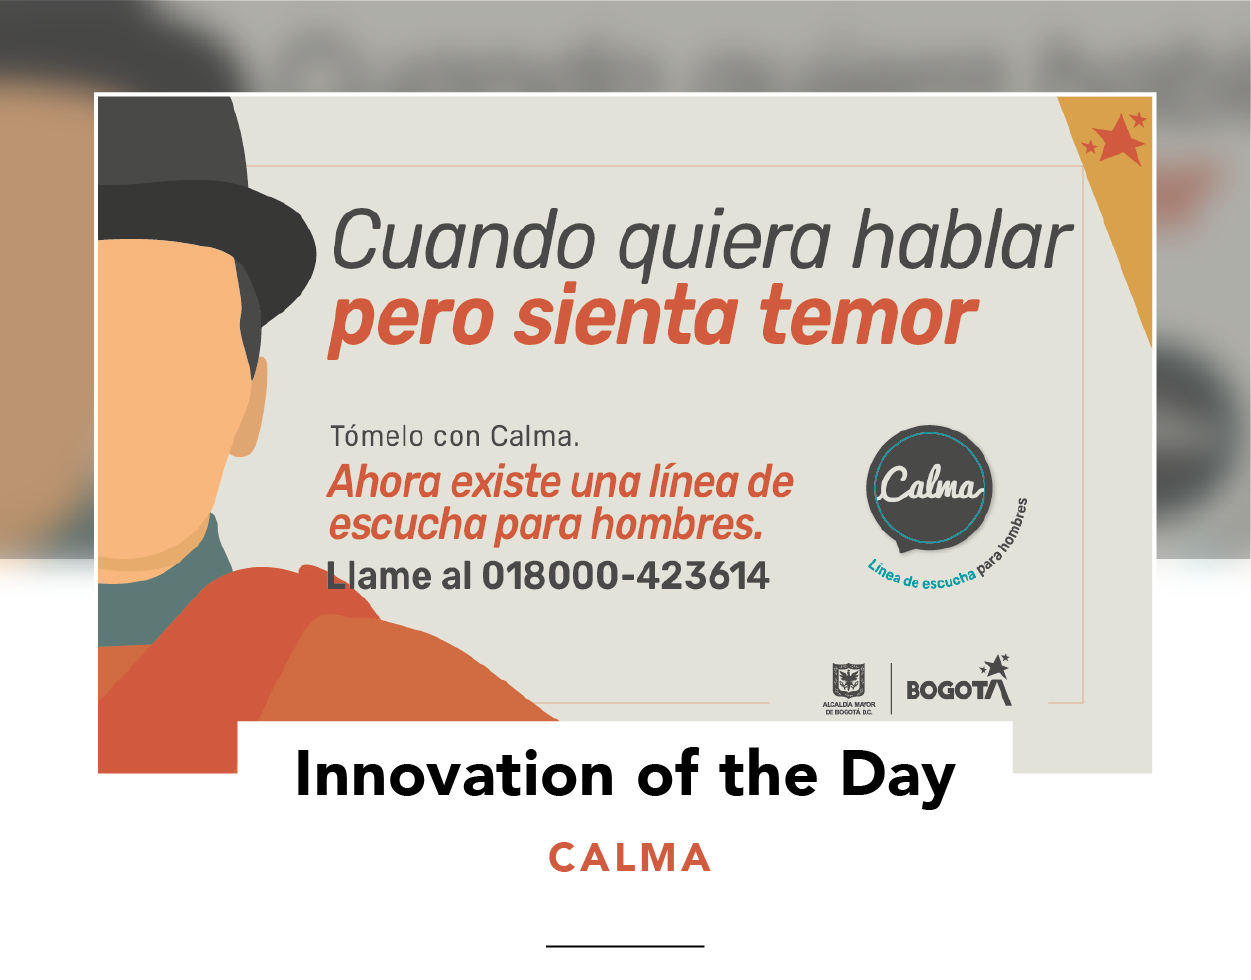 Promotional image for Calma, showing details and the text 'Quando quiera hablar pero sienta temor'